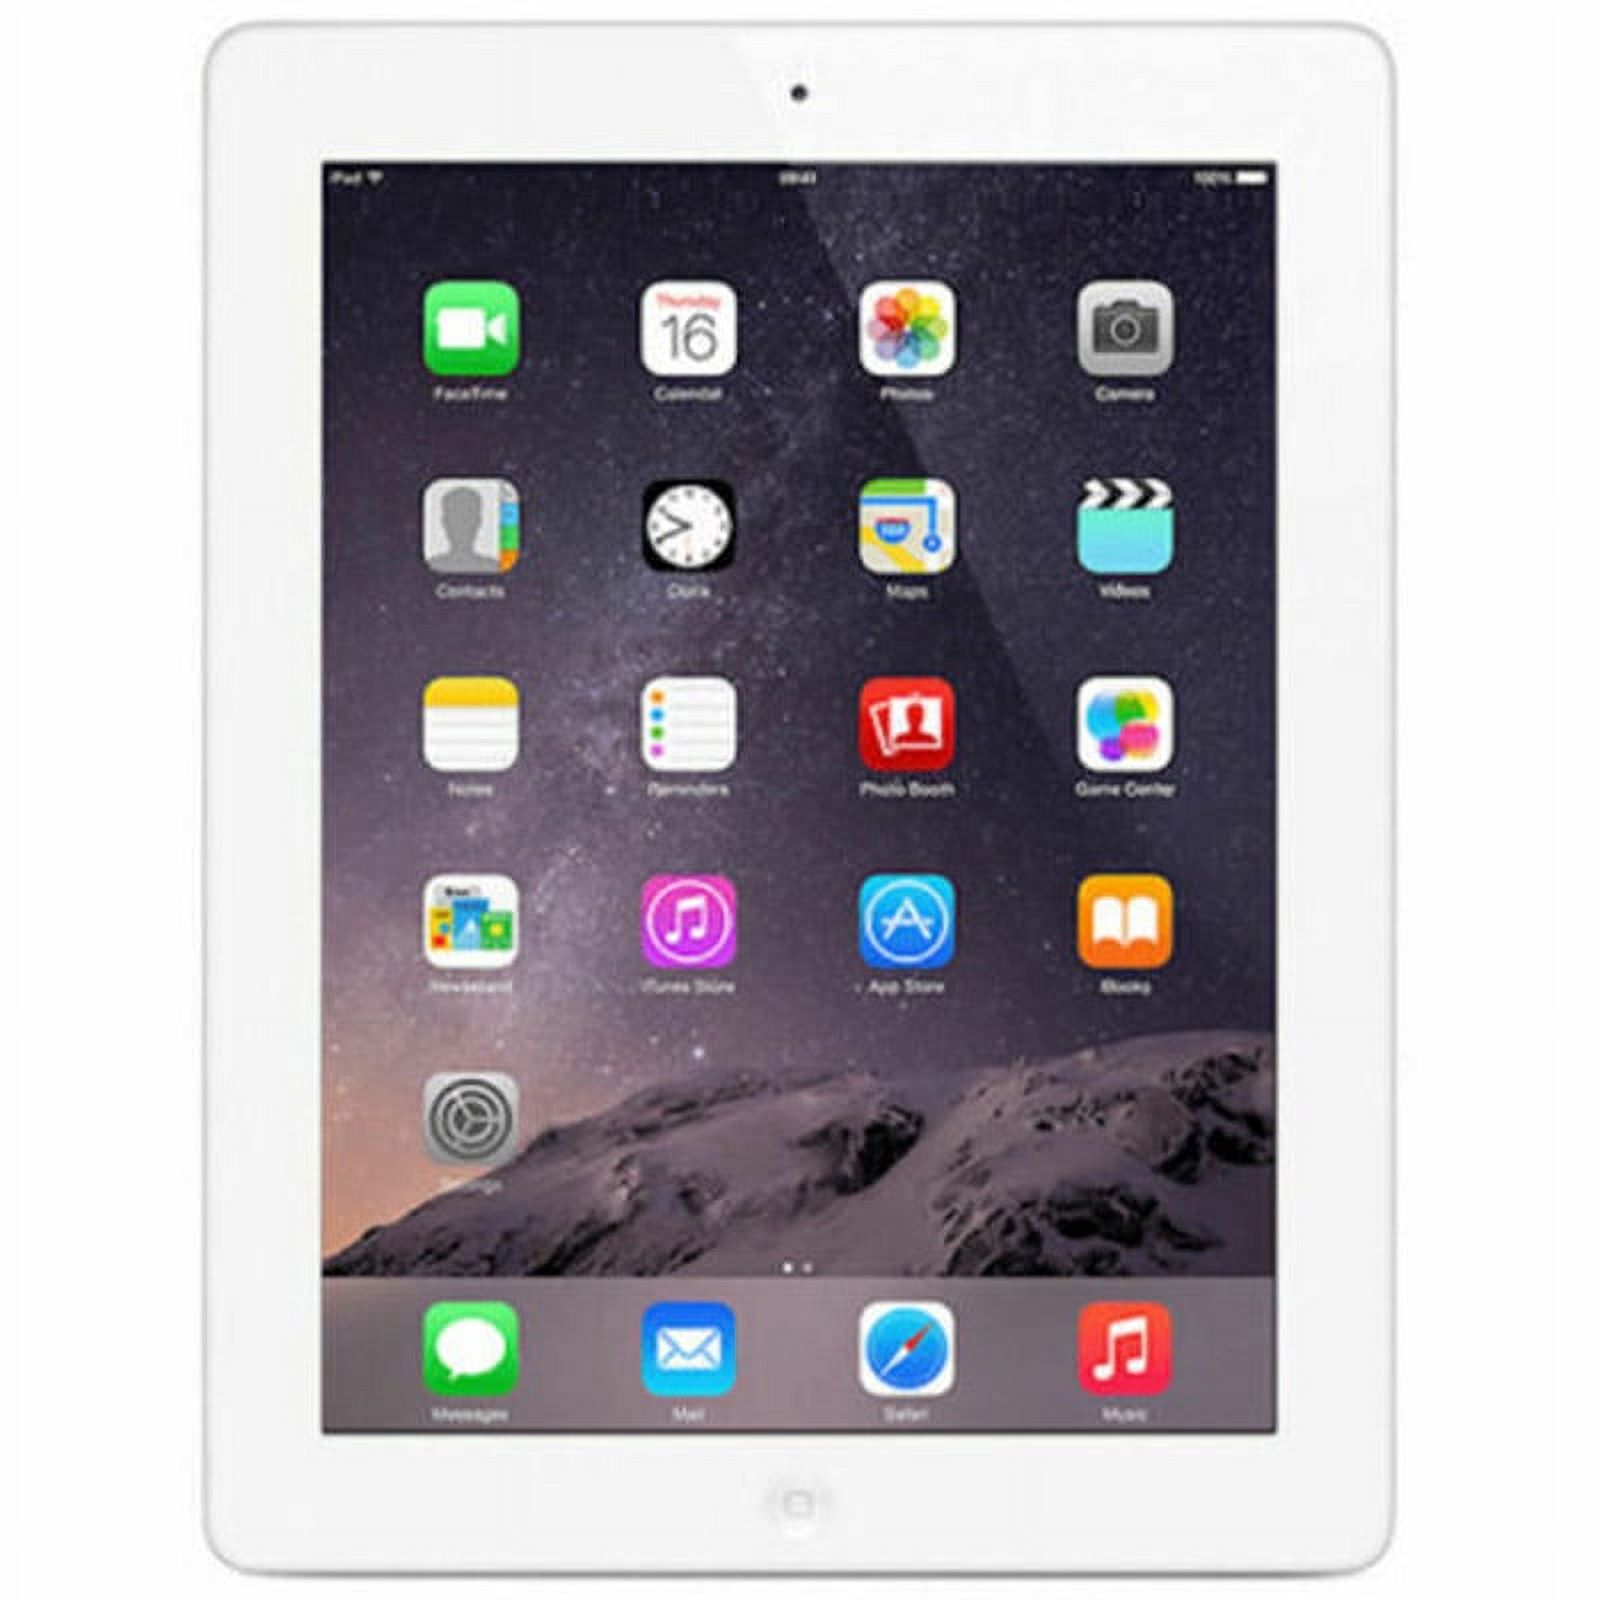 Restored Apple iPad 4th Gen Retina 16GB Wi-Fi 9.7in - White - (MD513LL/A) (Refurbished) - image 1 of 3